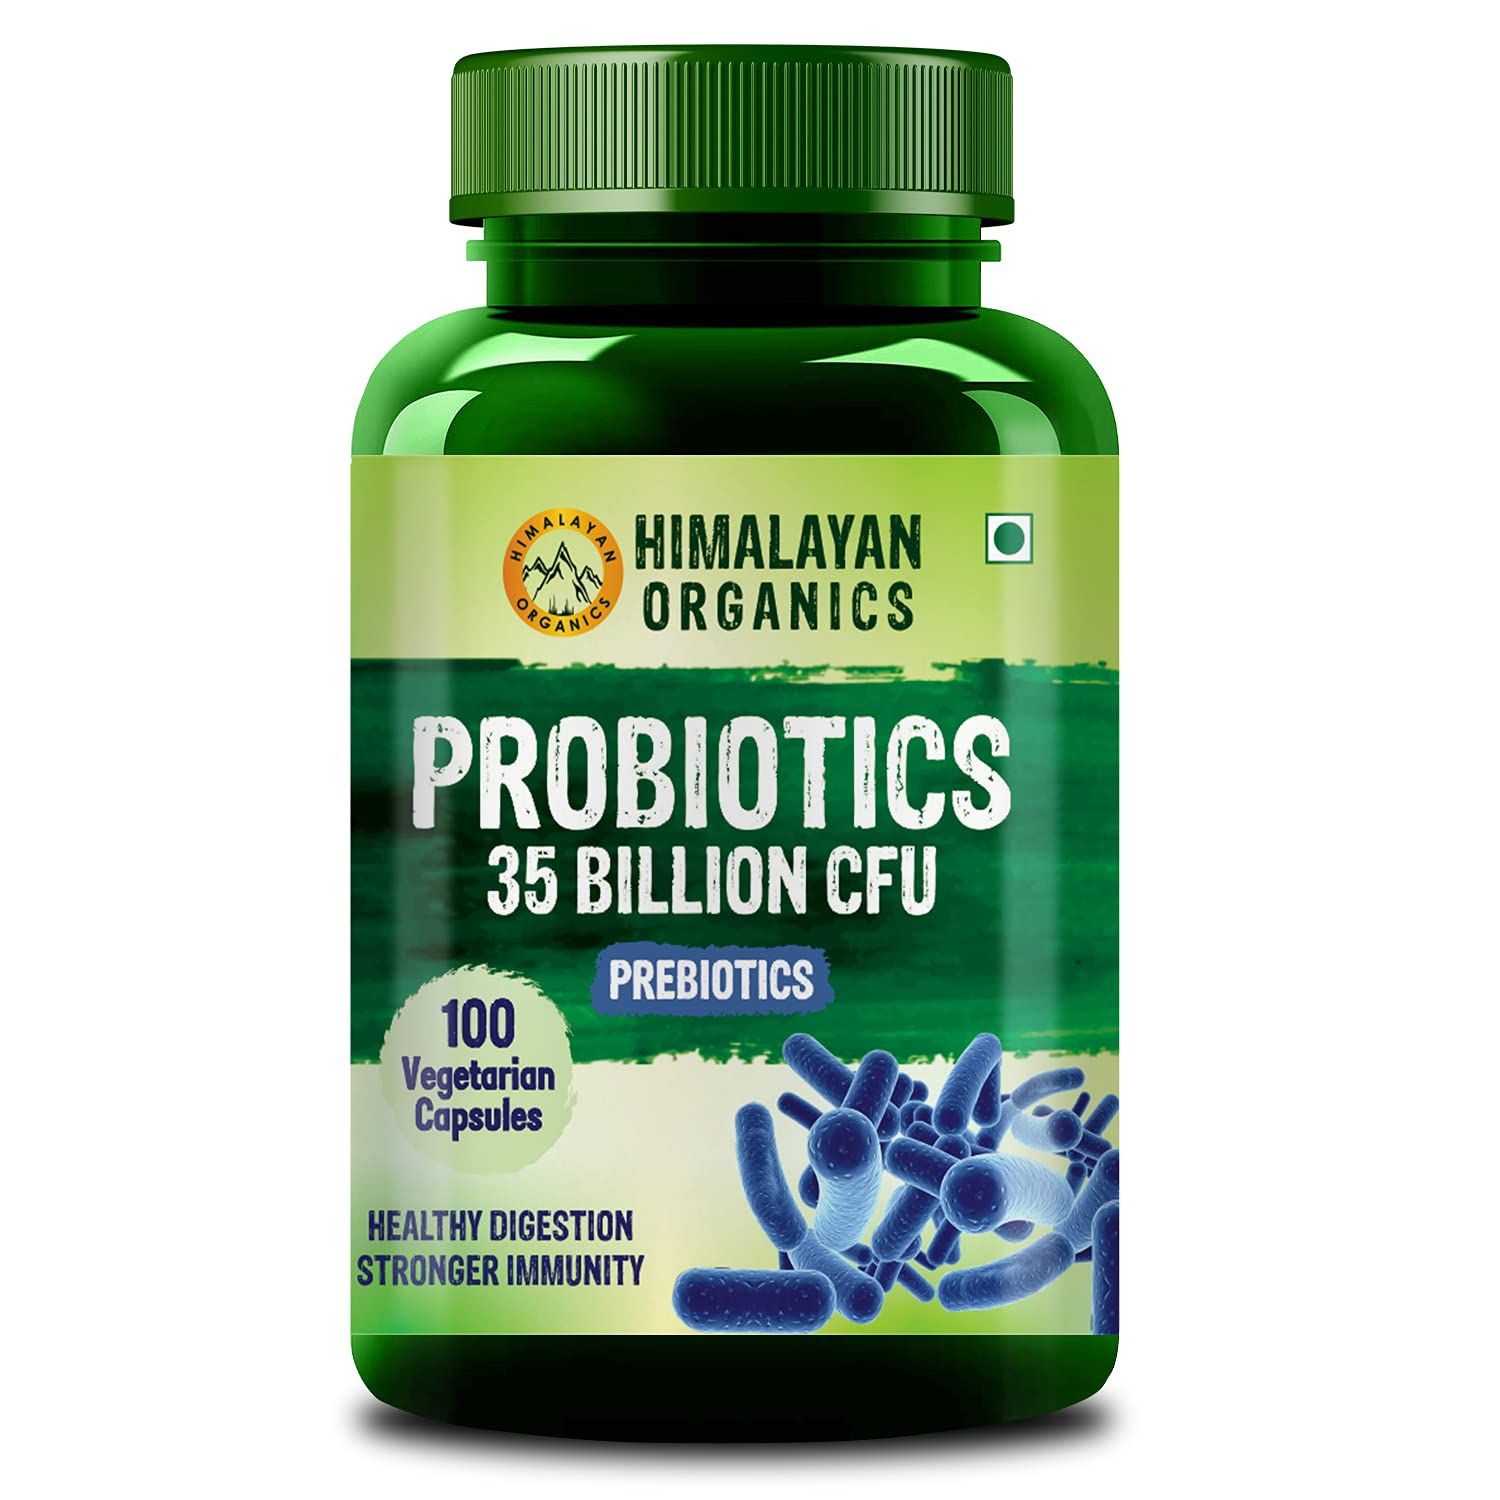 Himalayan Organics Probiotics Supplement 35 Billion CFU For Women & Men Capsule Image